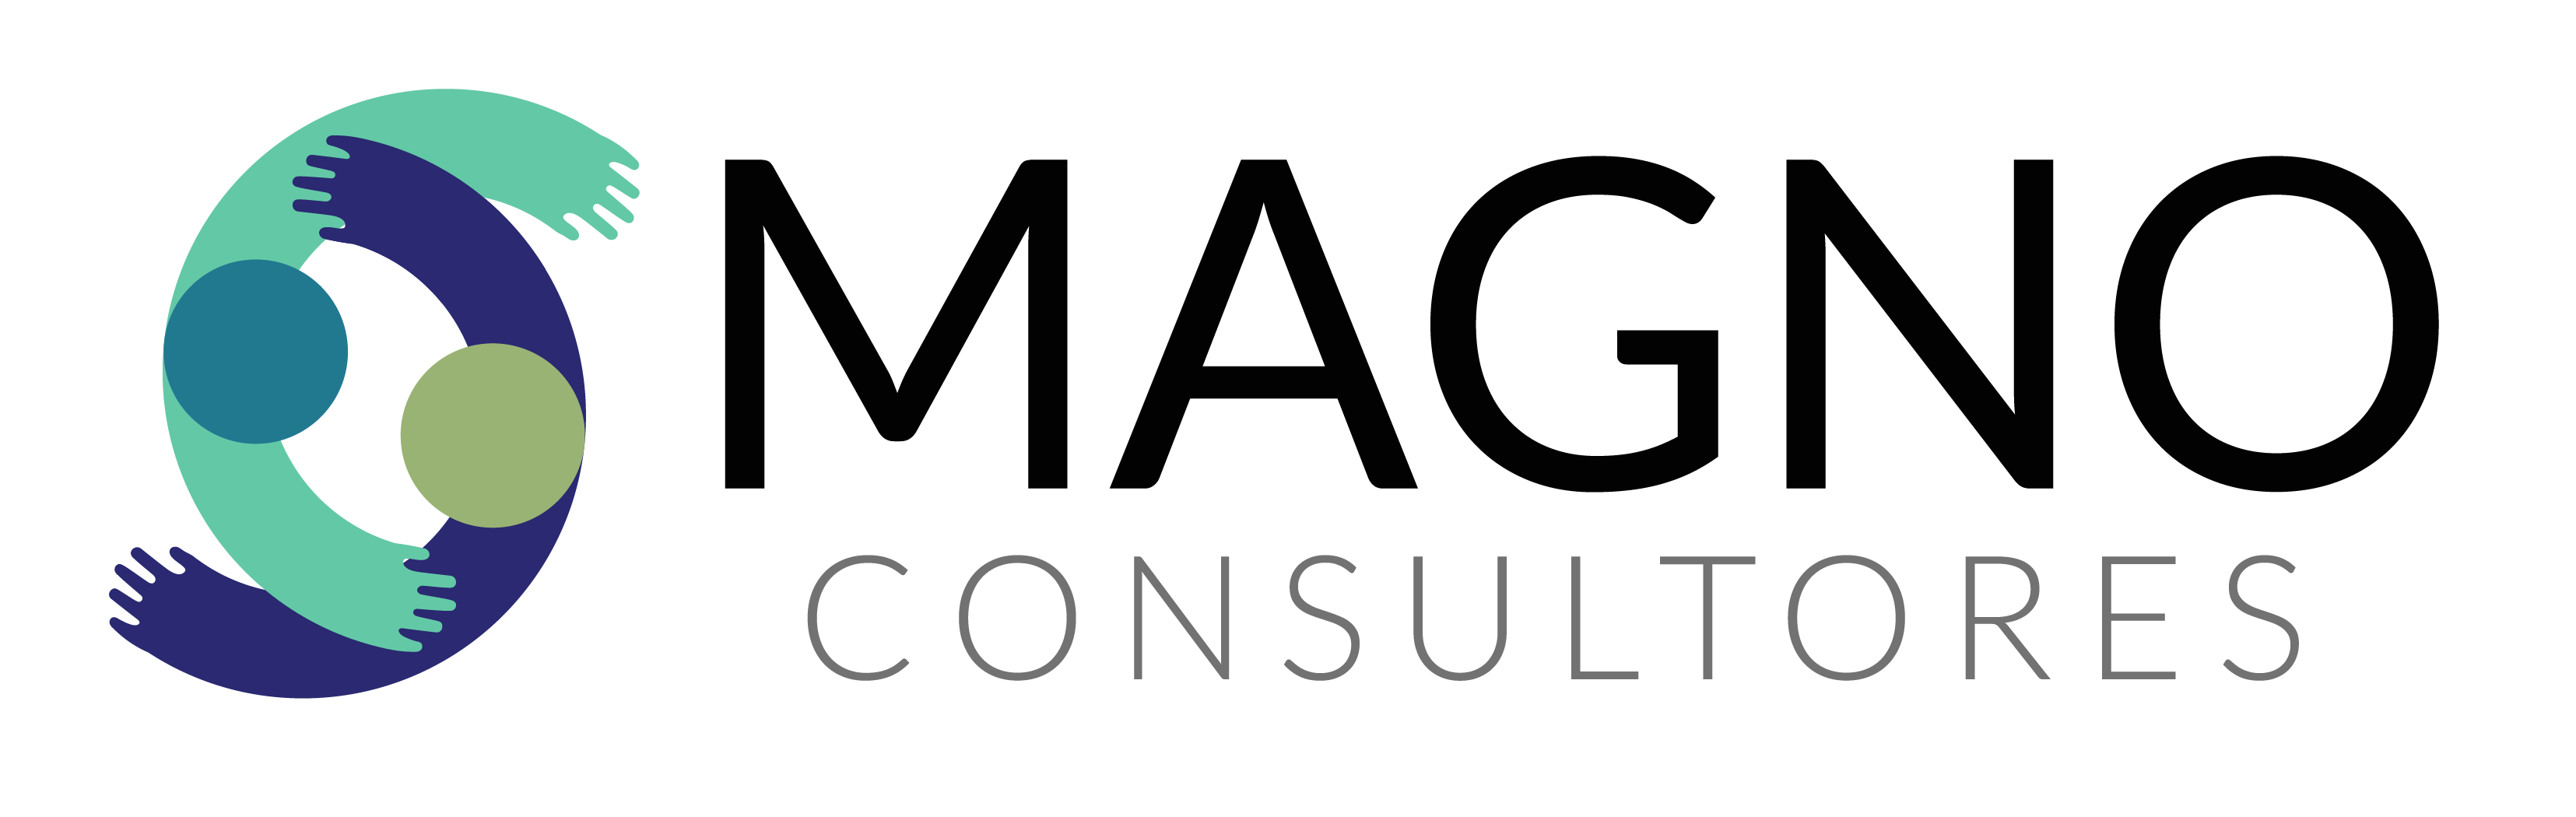 MAGNO CONSULTORES Logo